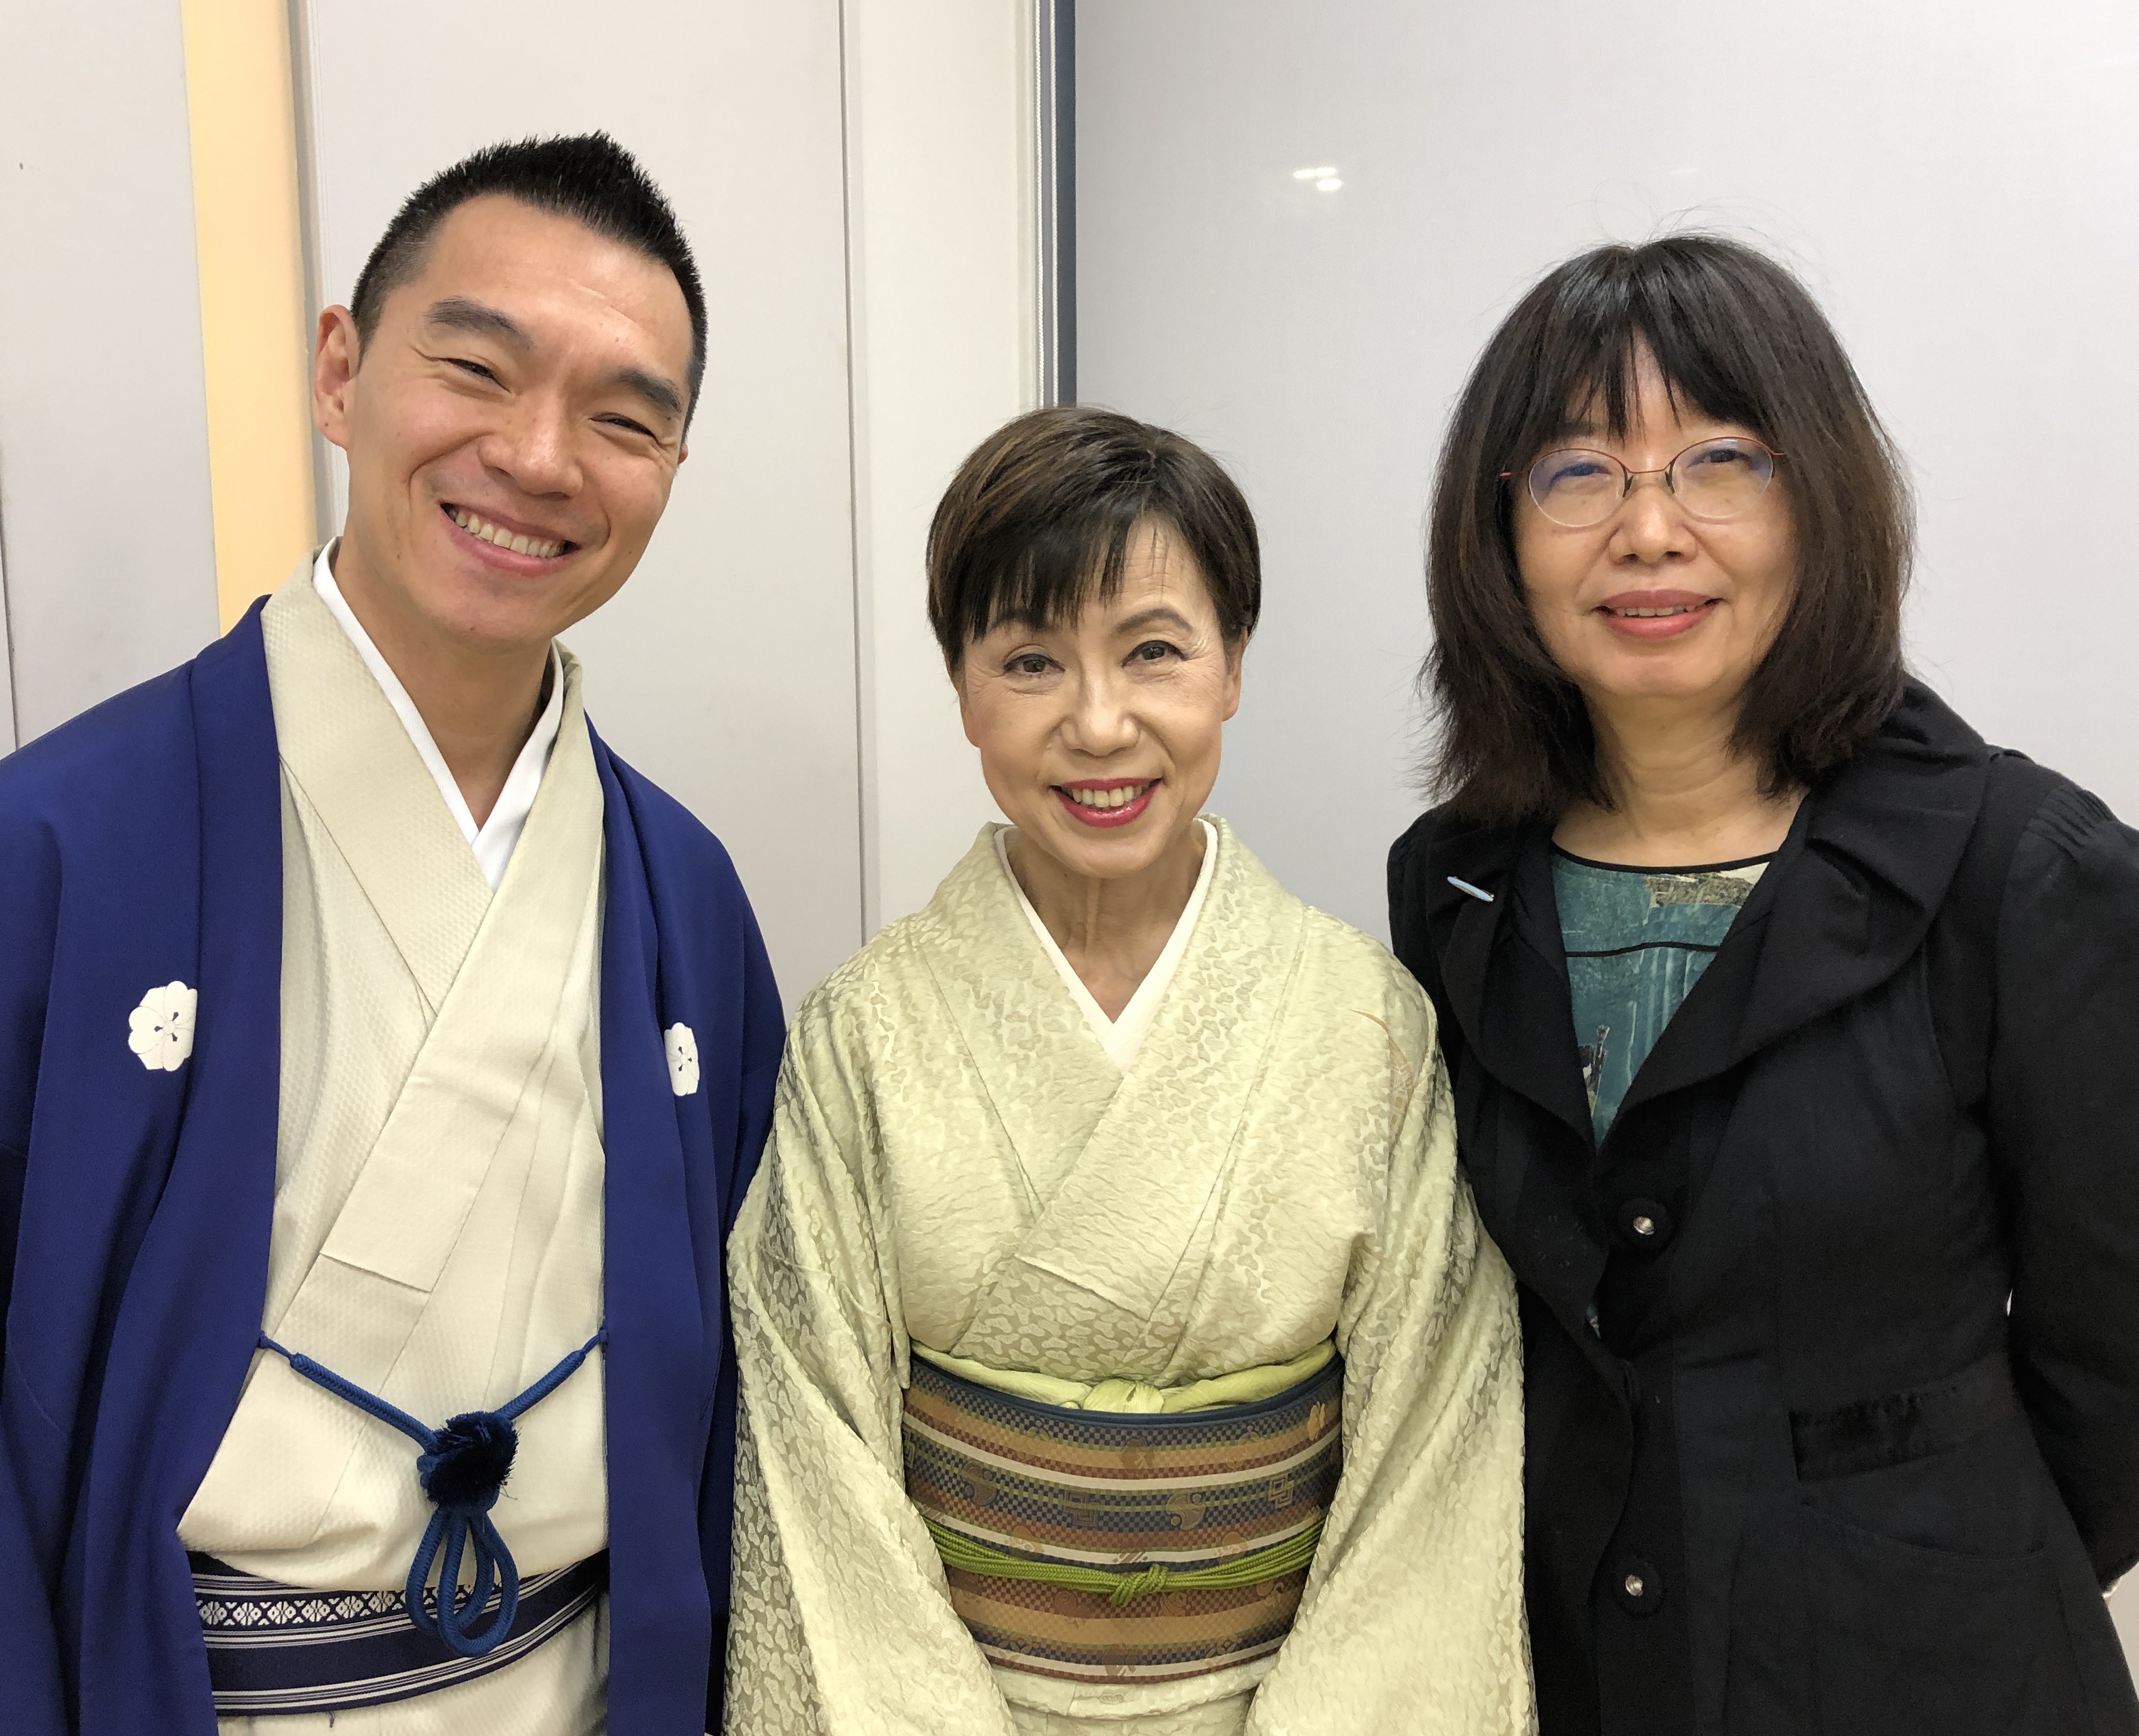 Professor Eiko Ikegami with panelists at Hosei University in Japan